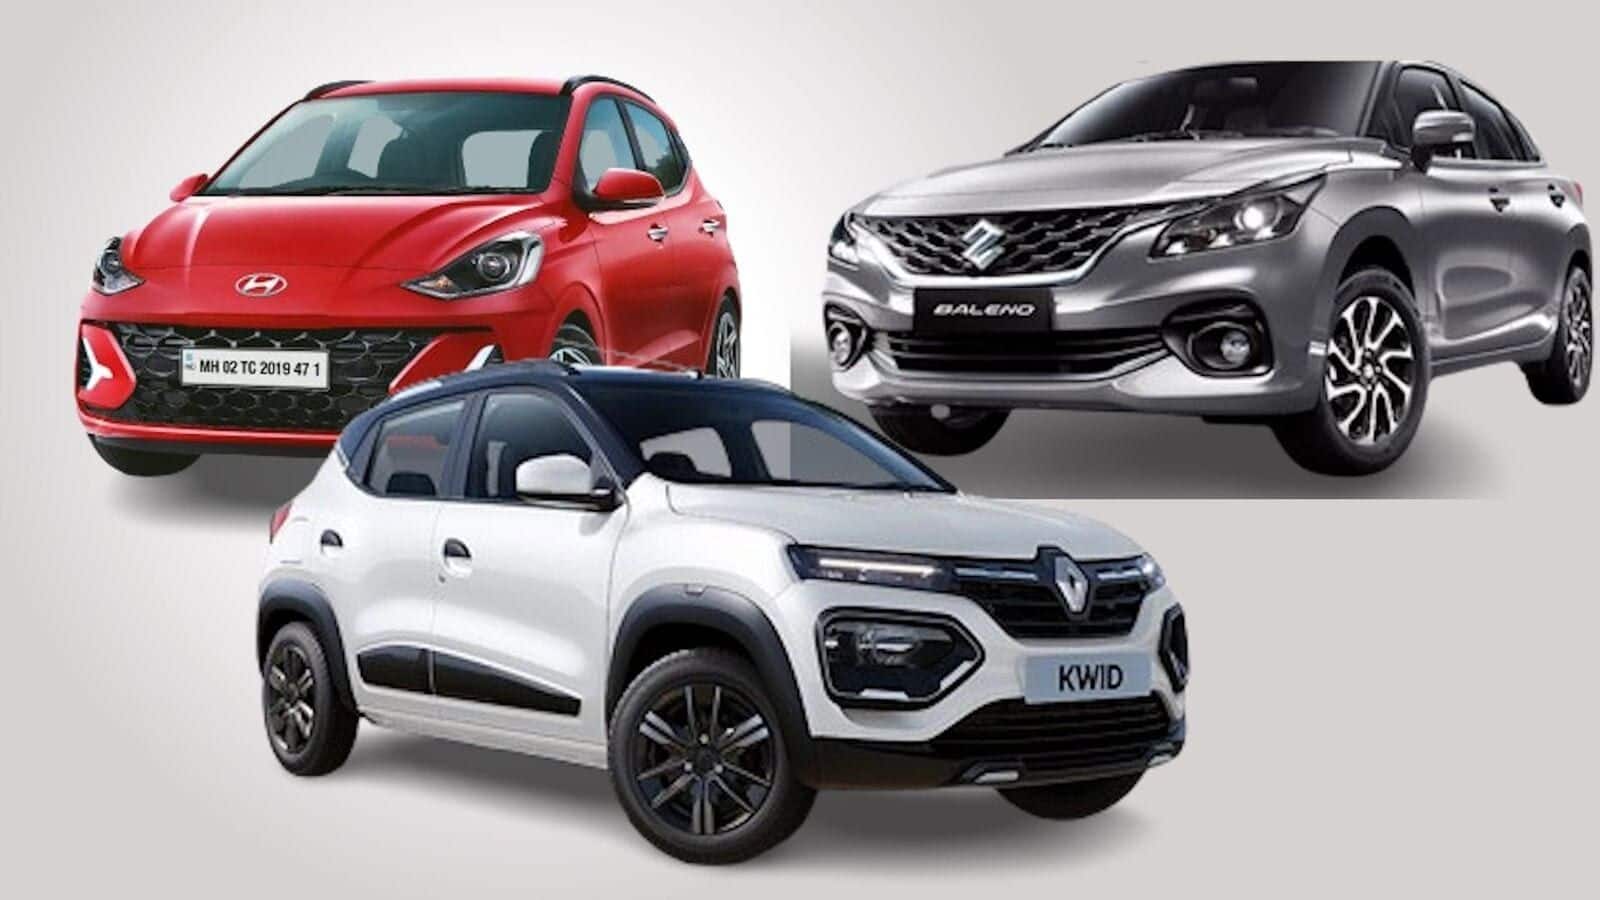 Indian small car exports rise amid domestic SUV demand